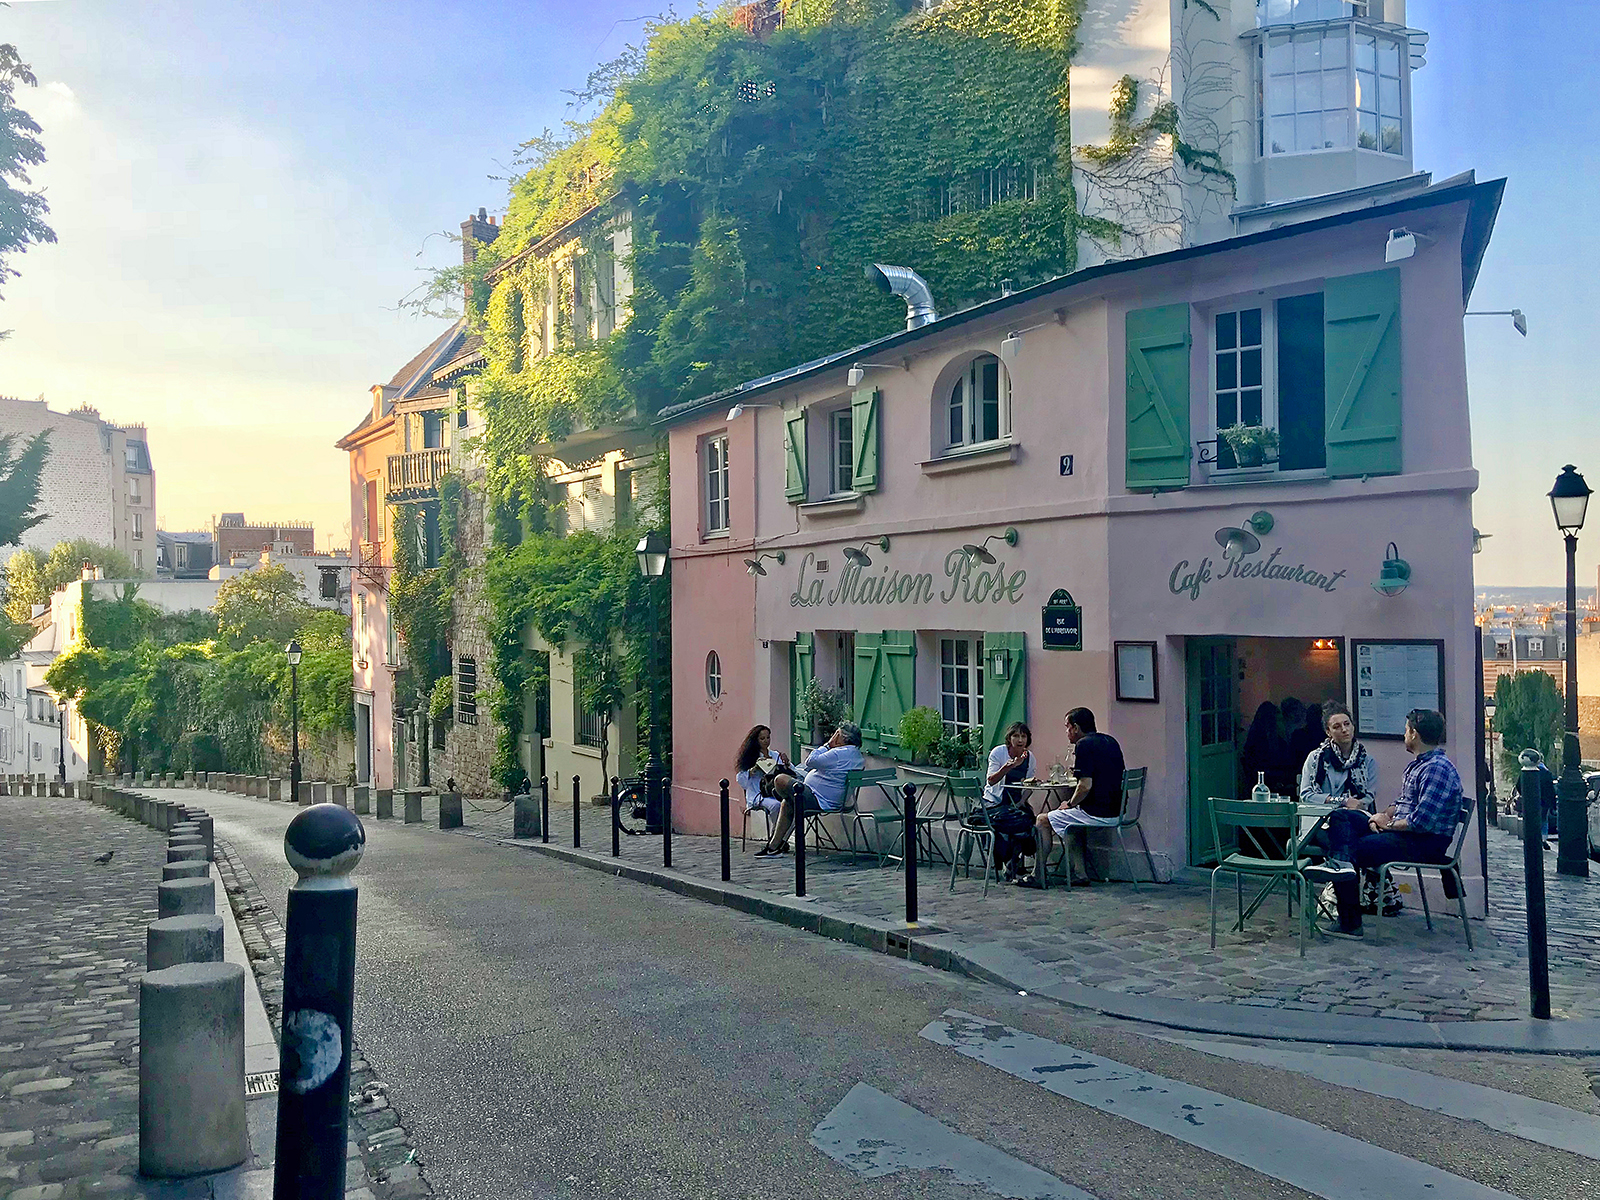 Drehorte Emily in Paris: 23 Orte, wo die Netflix-Serie „Emily in Paris“ gedreht wurde